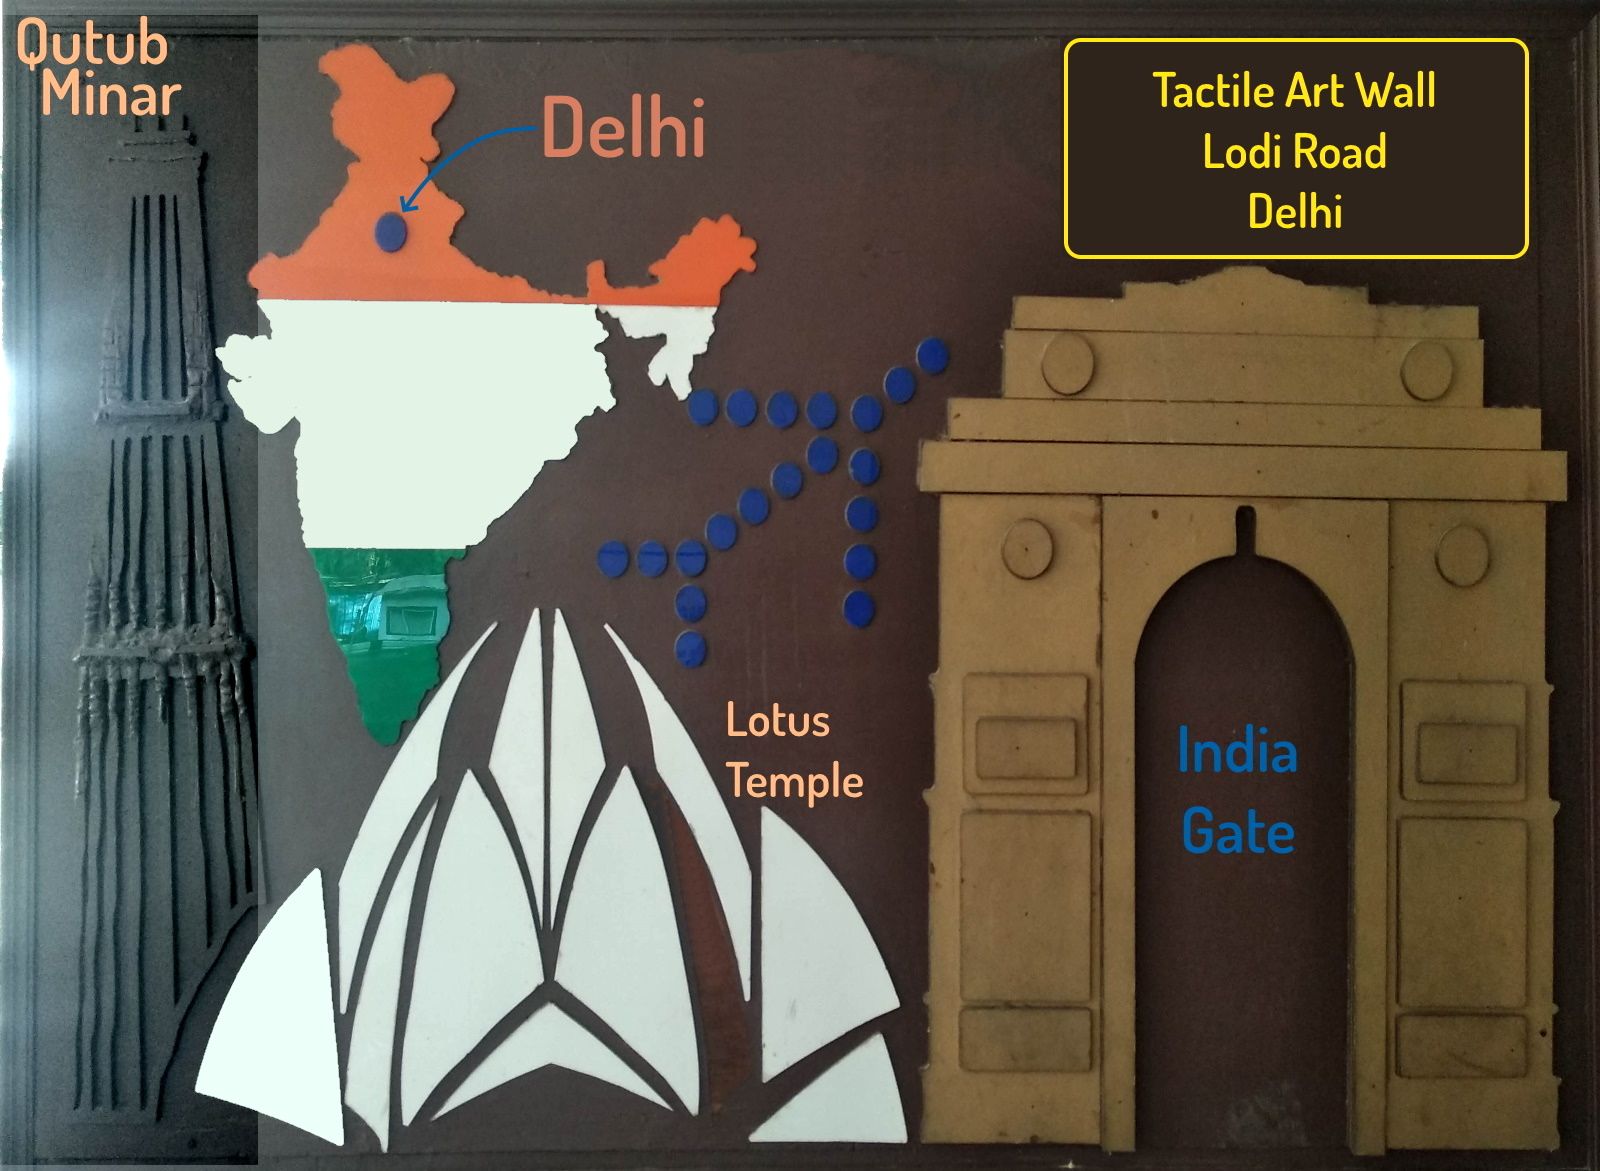 The Tactile Art Wall in Delhi